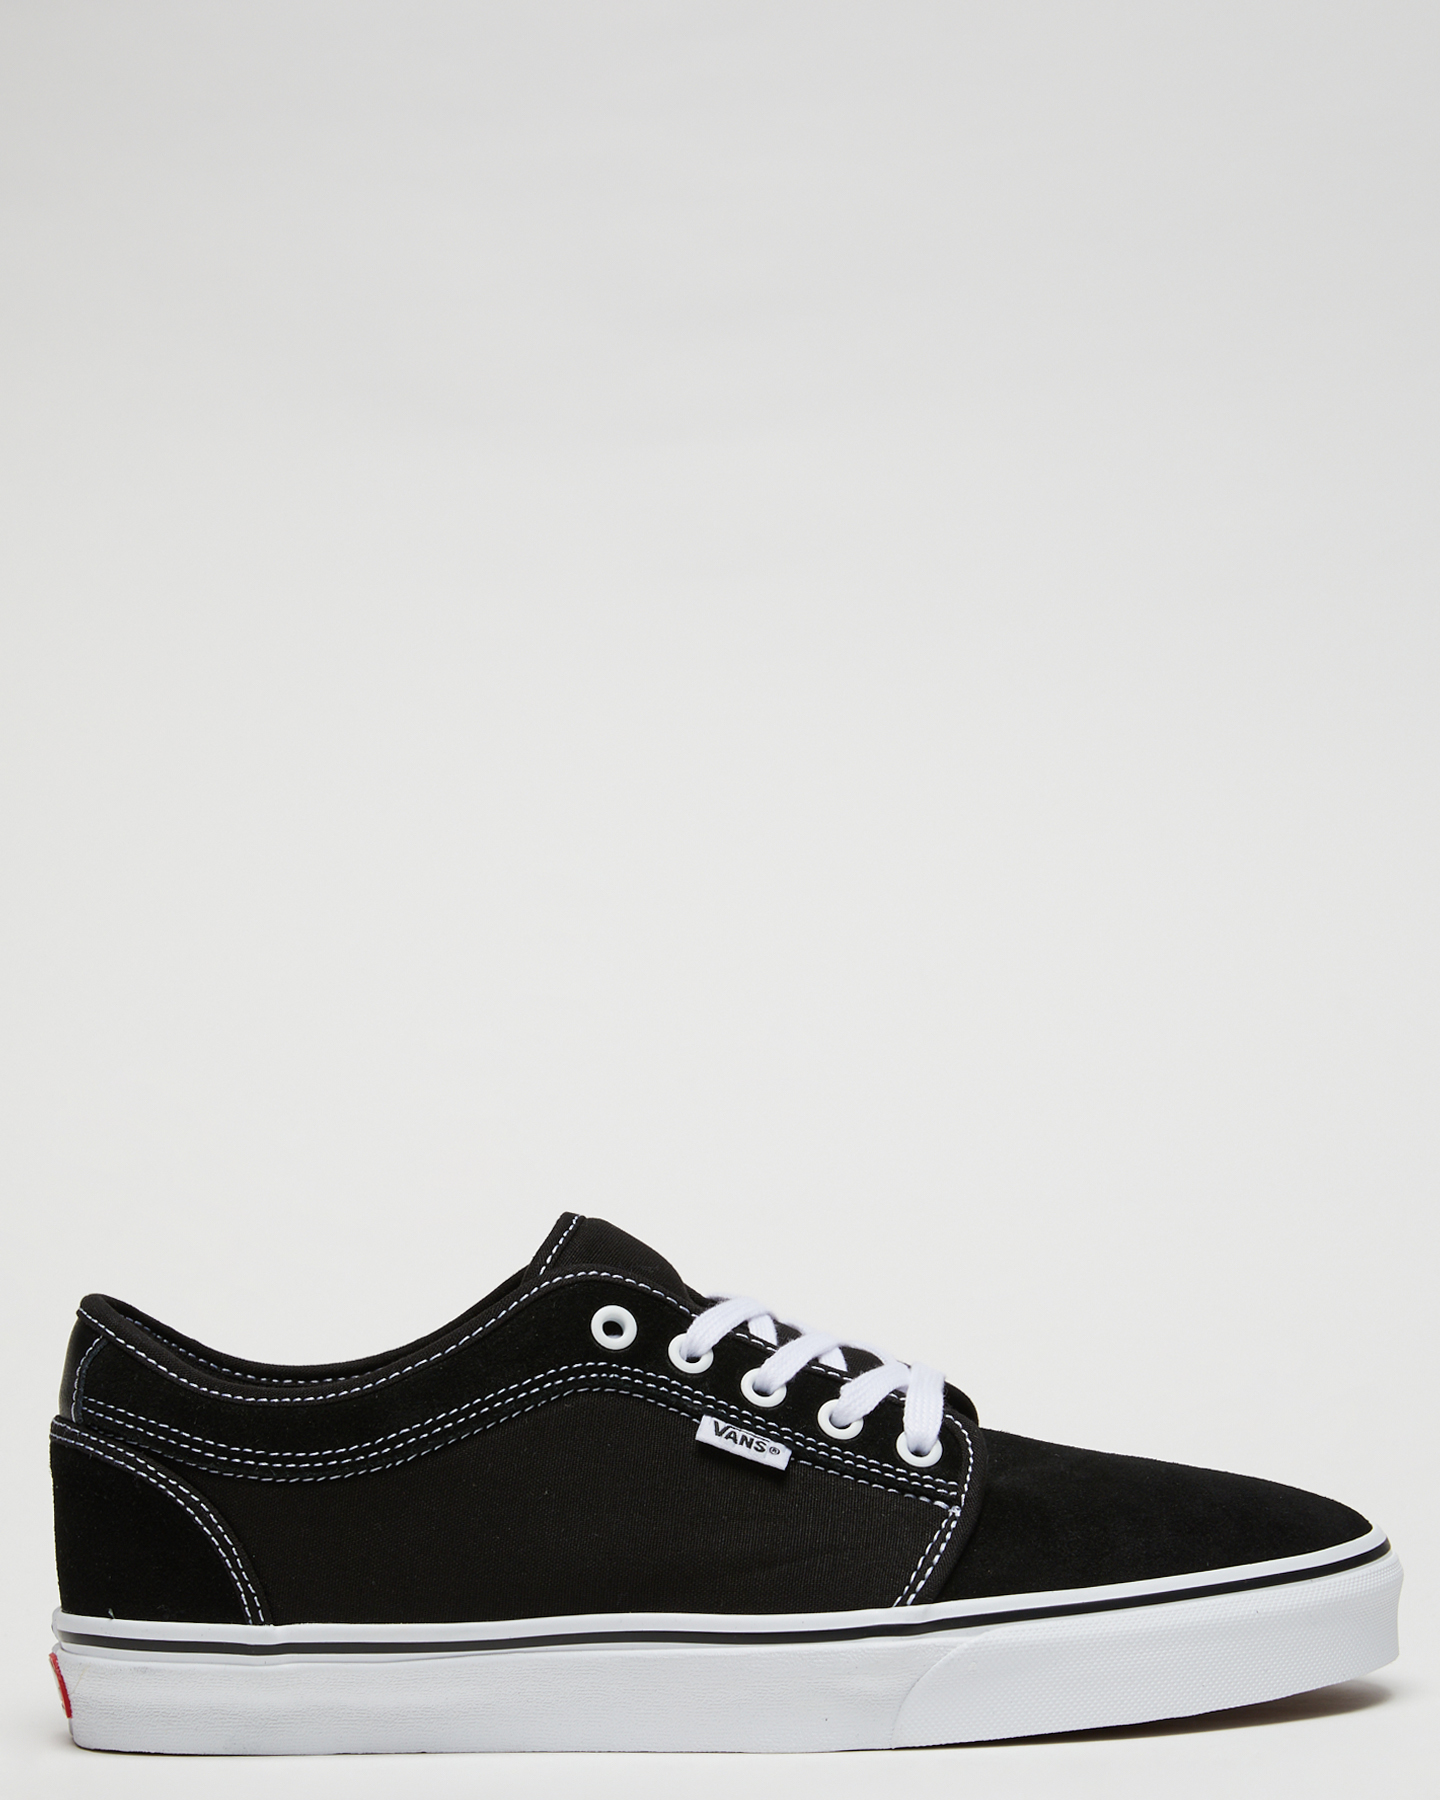 Vans Skate Chukka Low Shoe - Black White | SurfStitch